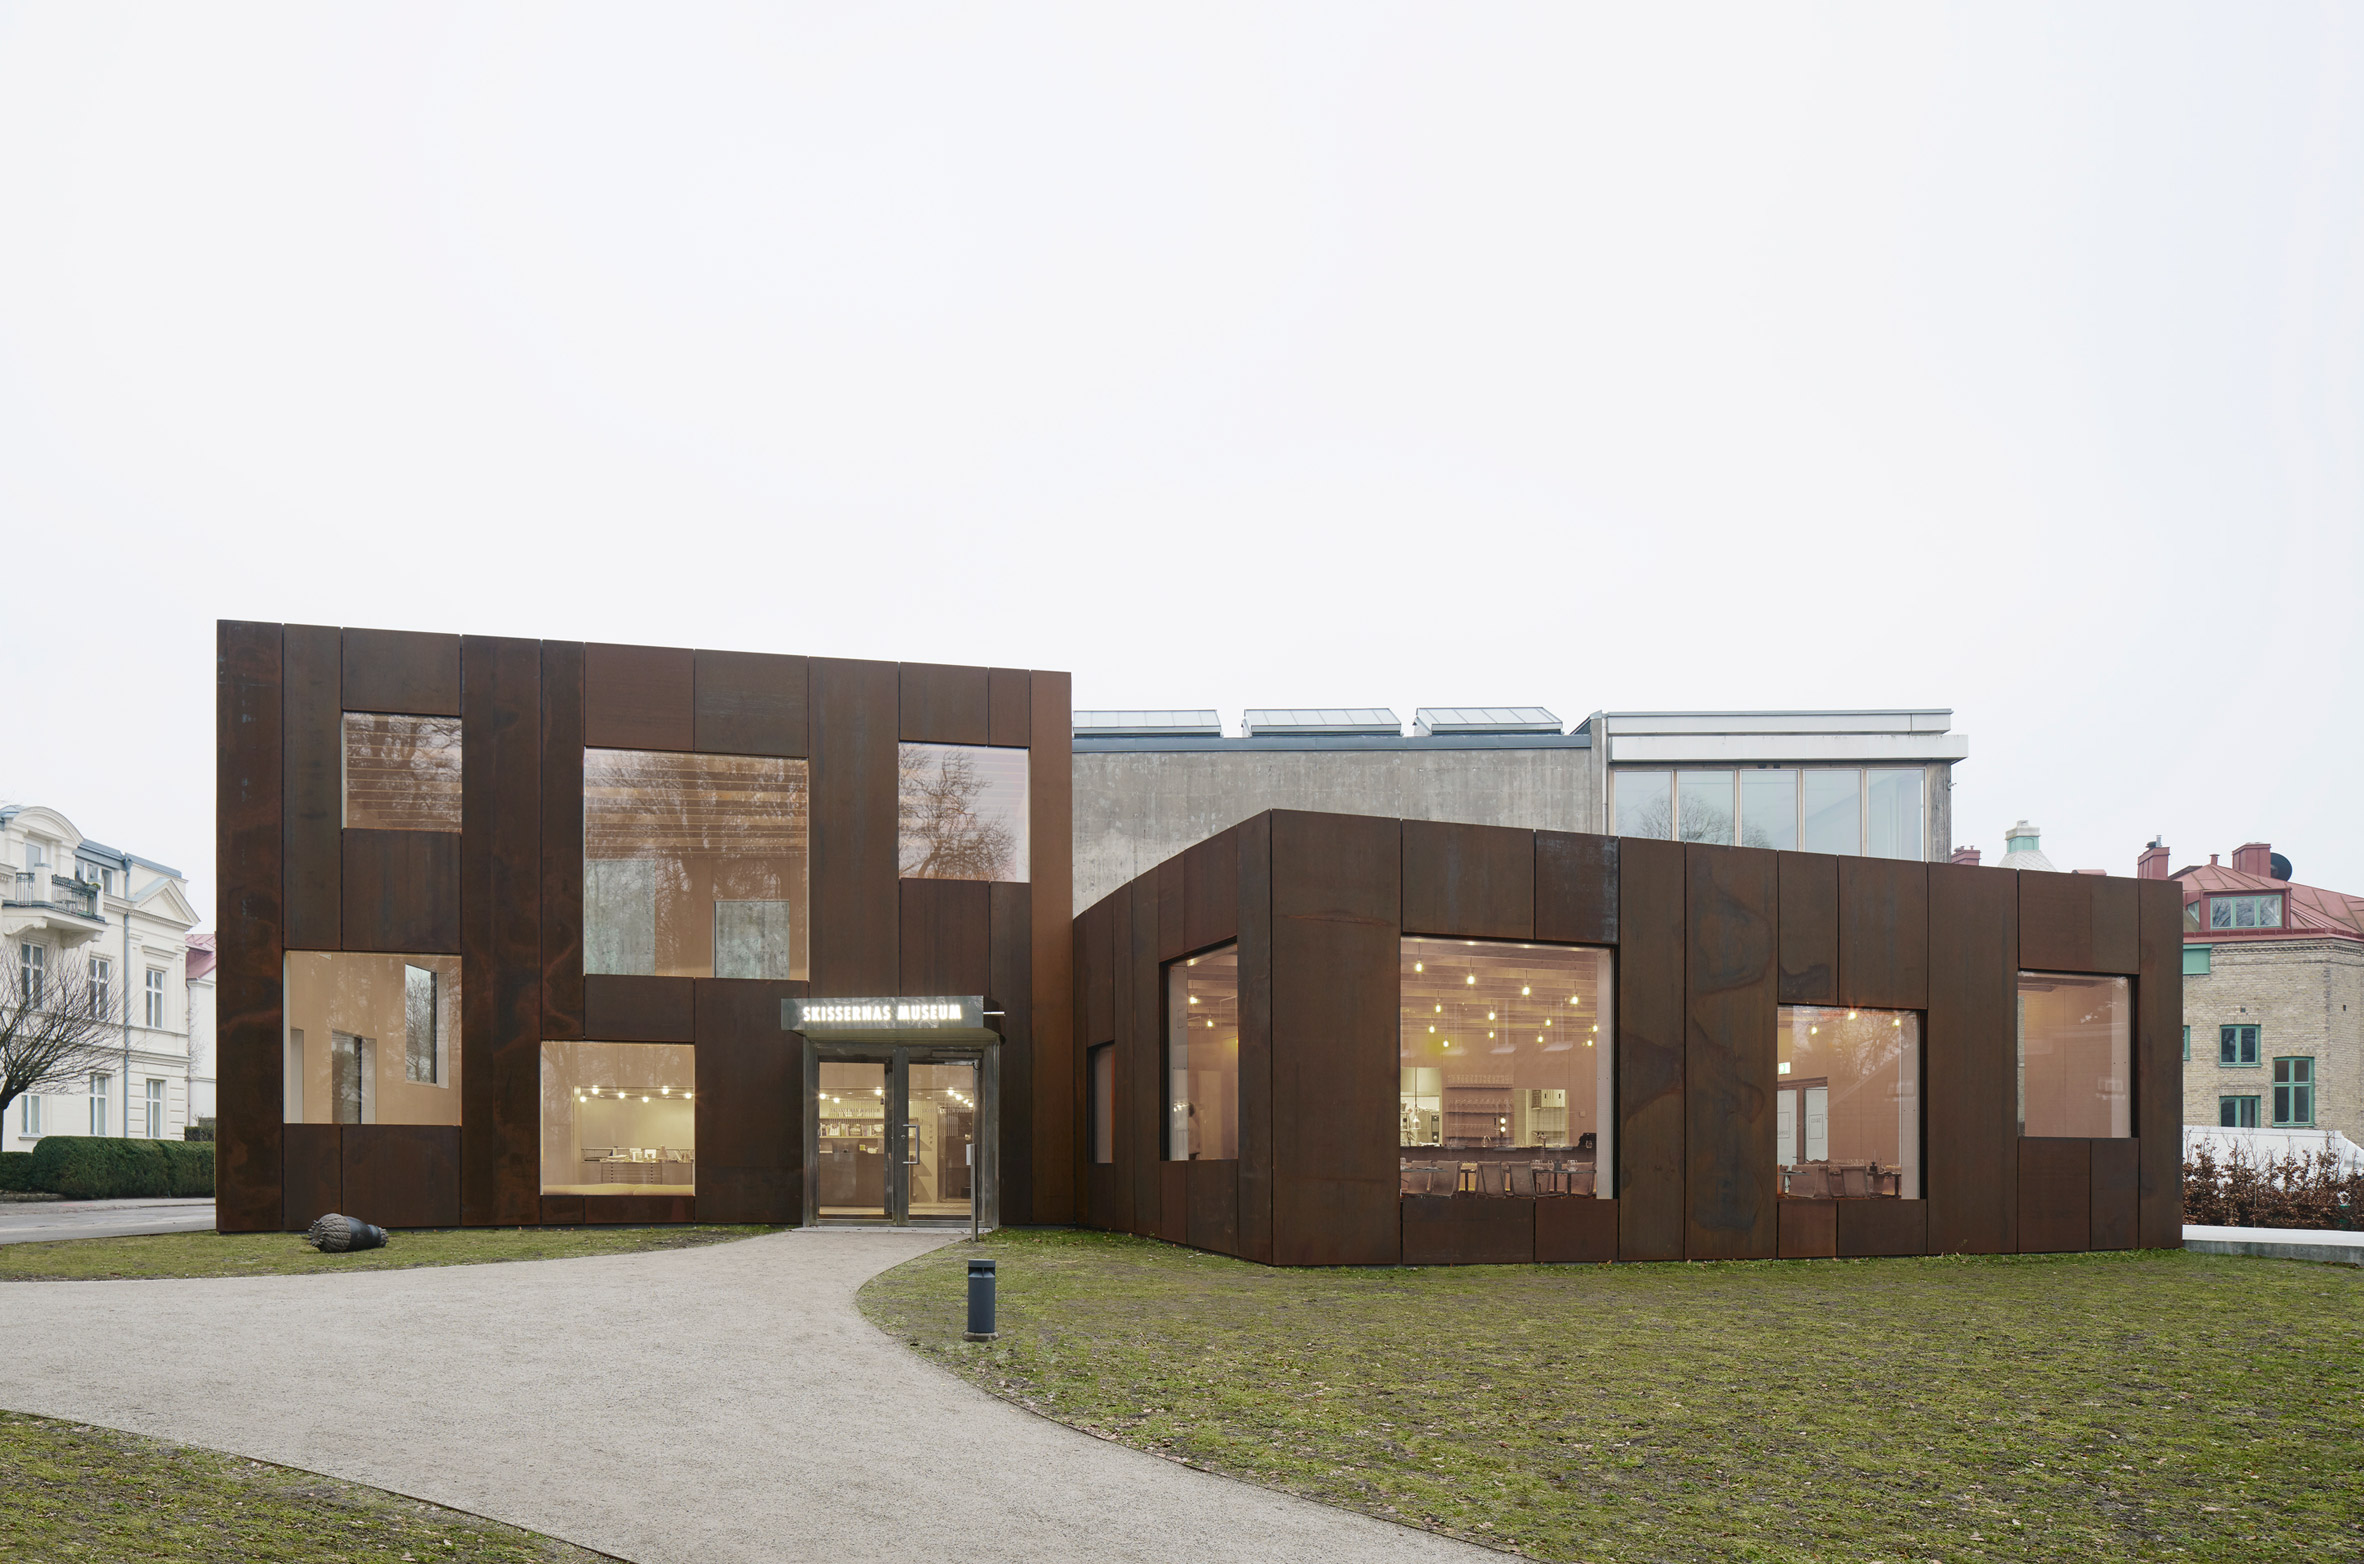 Elding Oscarson creates "slightly bent" weathering steel extension to Lund's Skissernas Museum